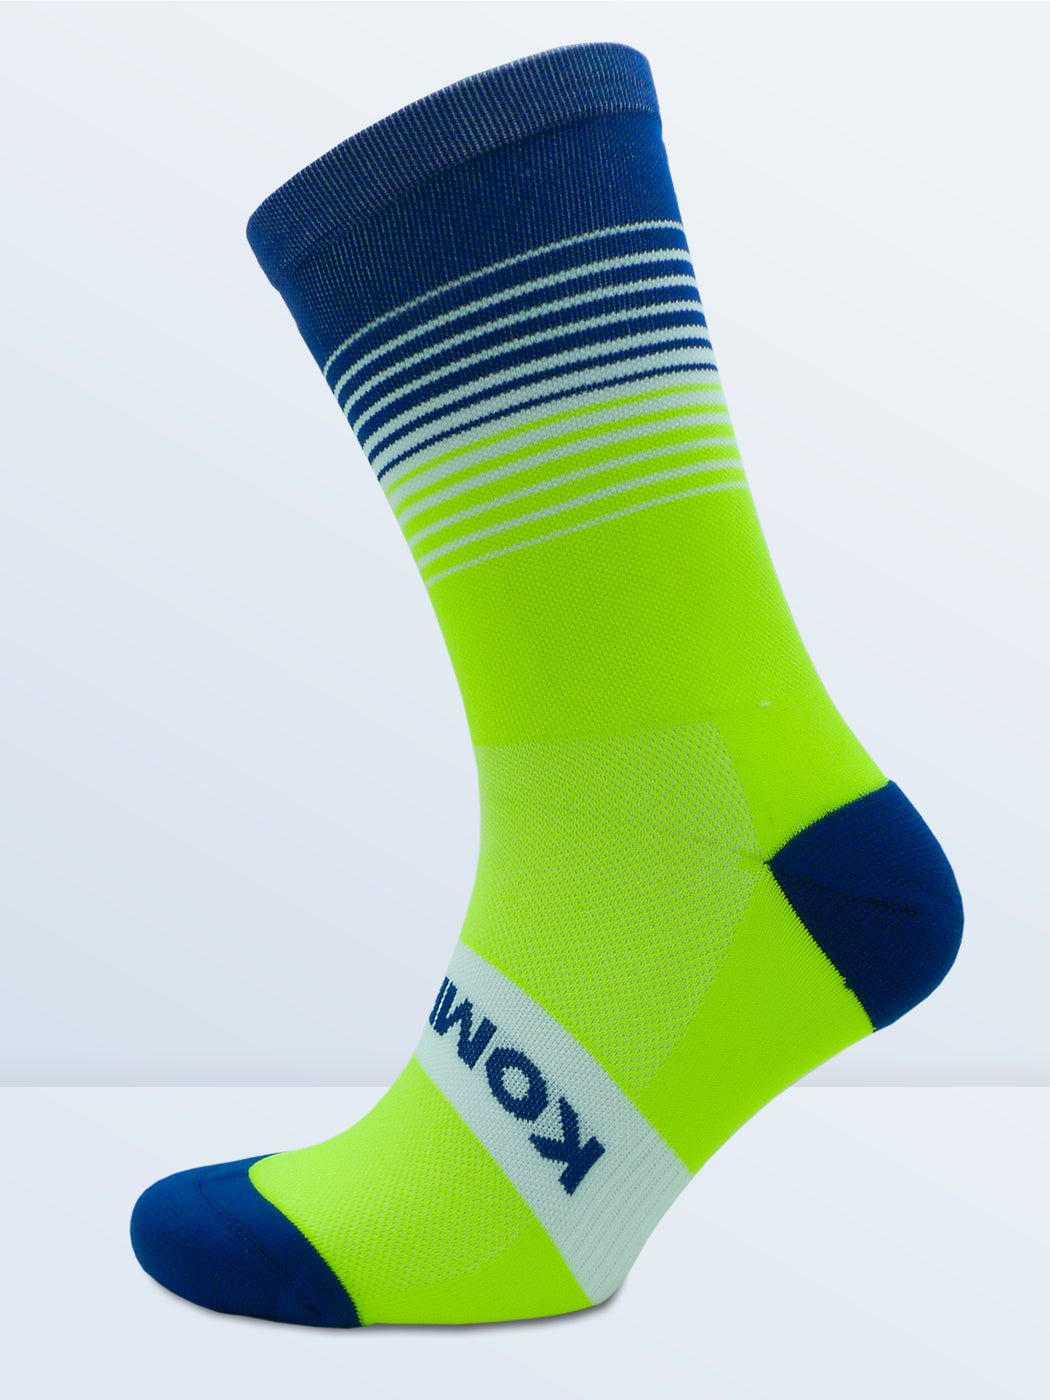 Swagger Socks - Fluro Yellow & Blue